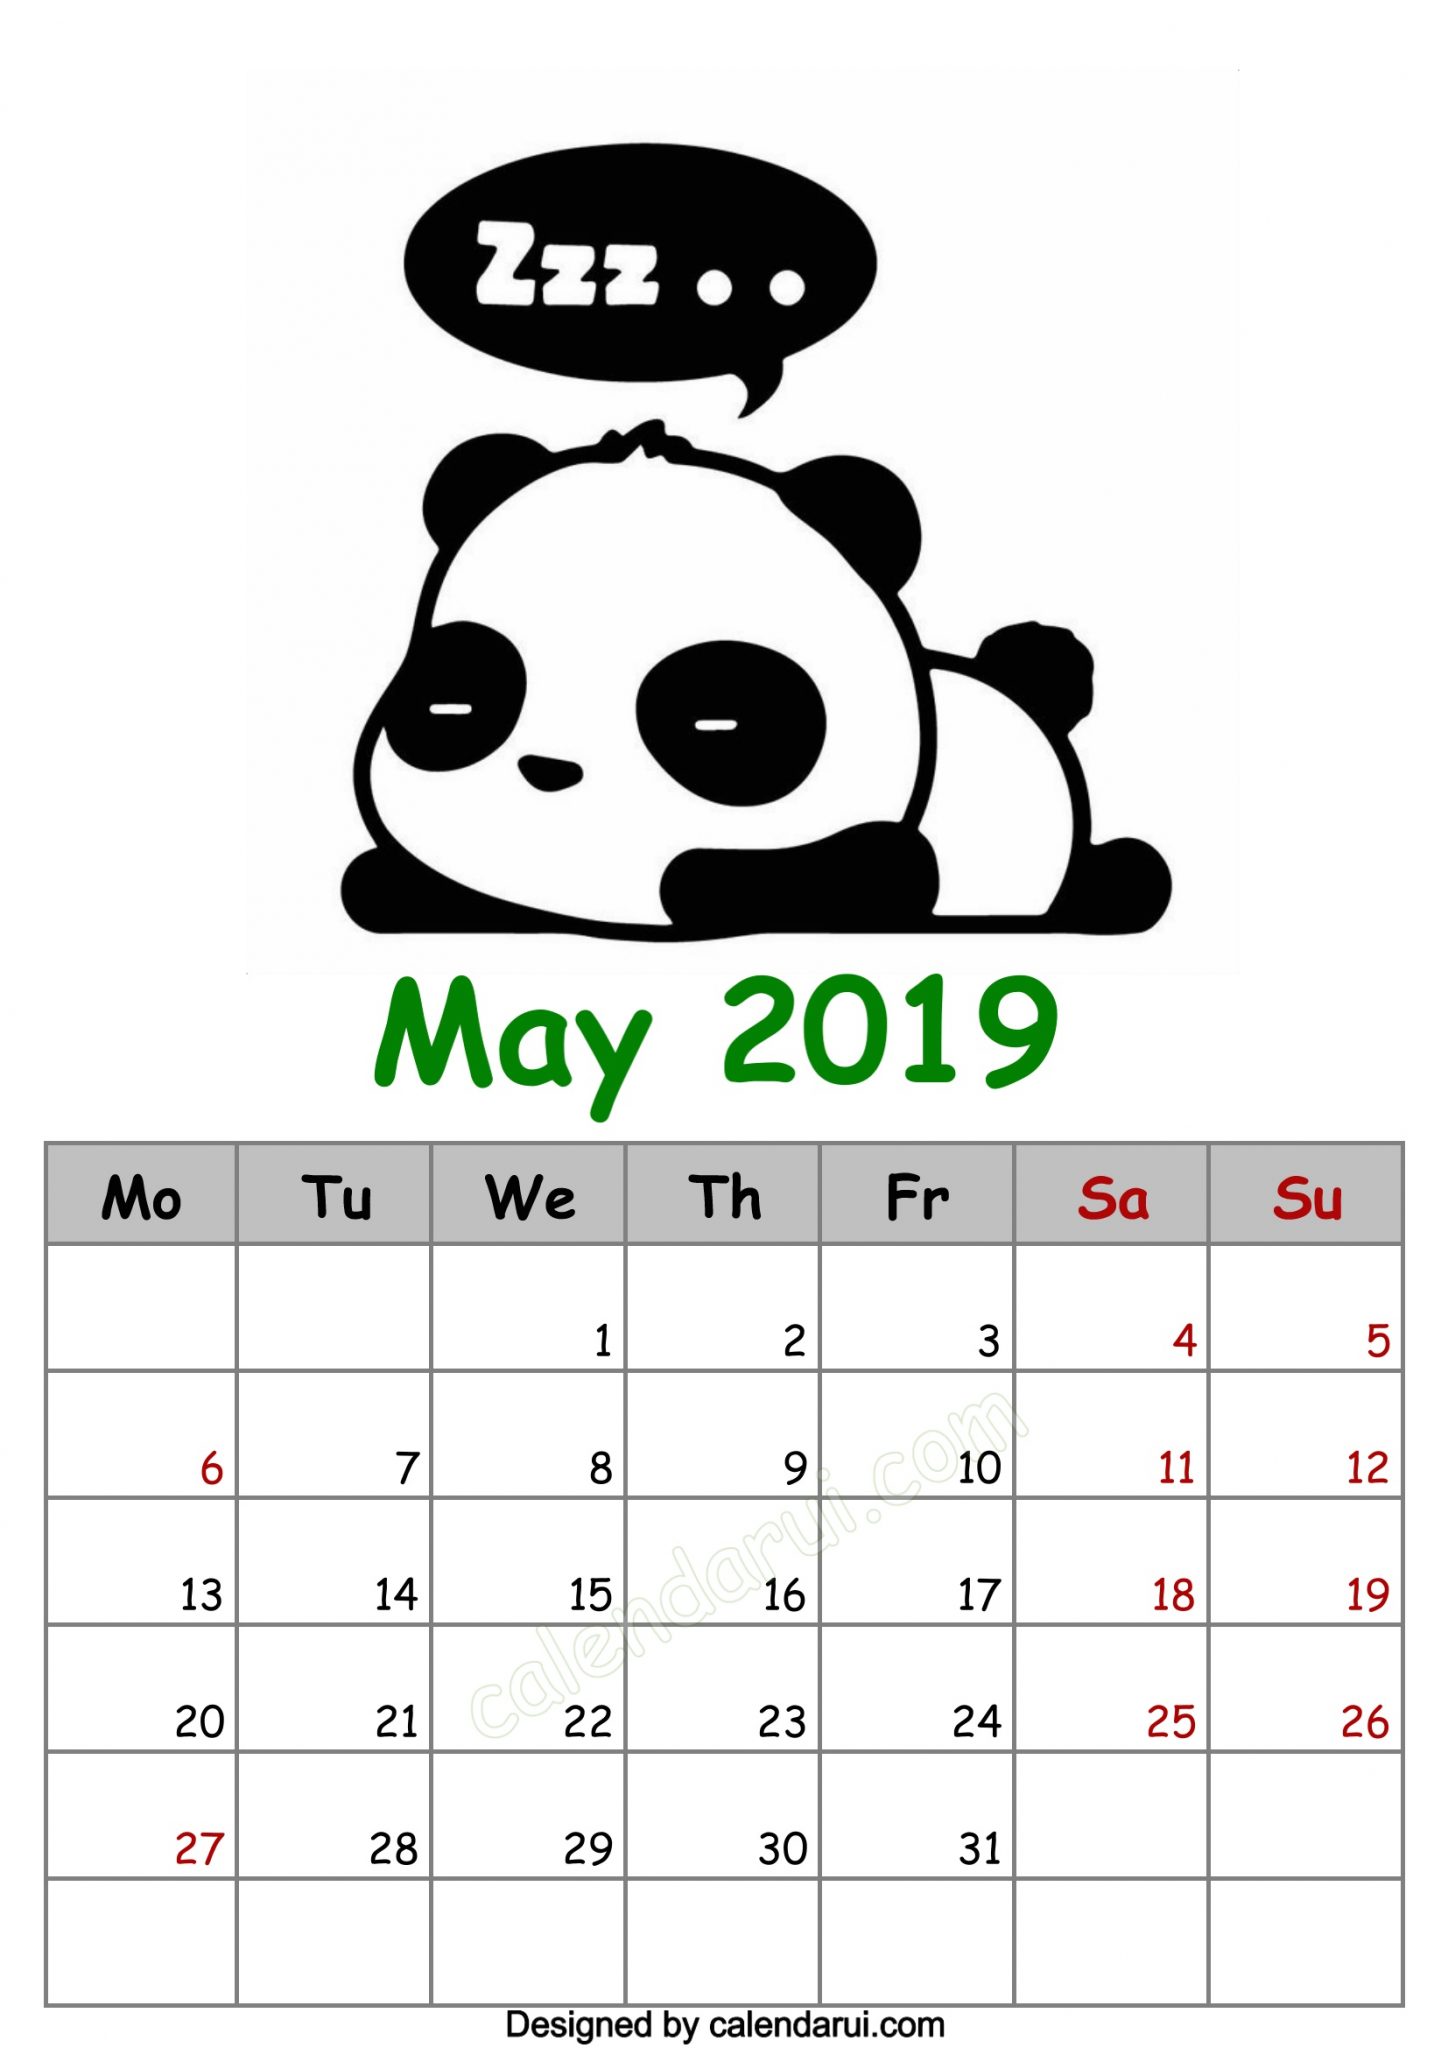 Cute May 2019 Calendar For Kids